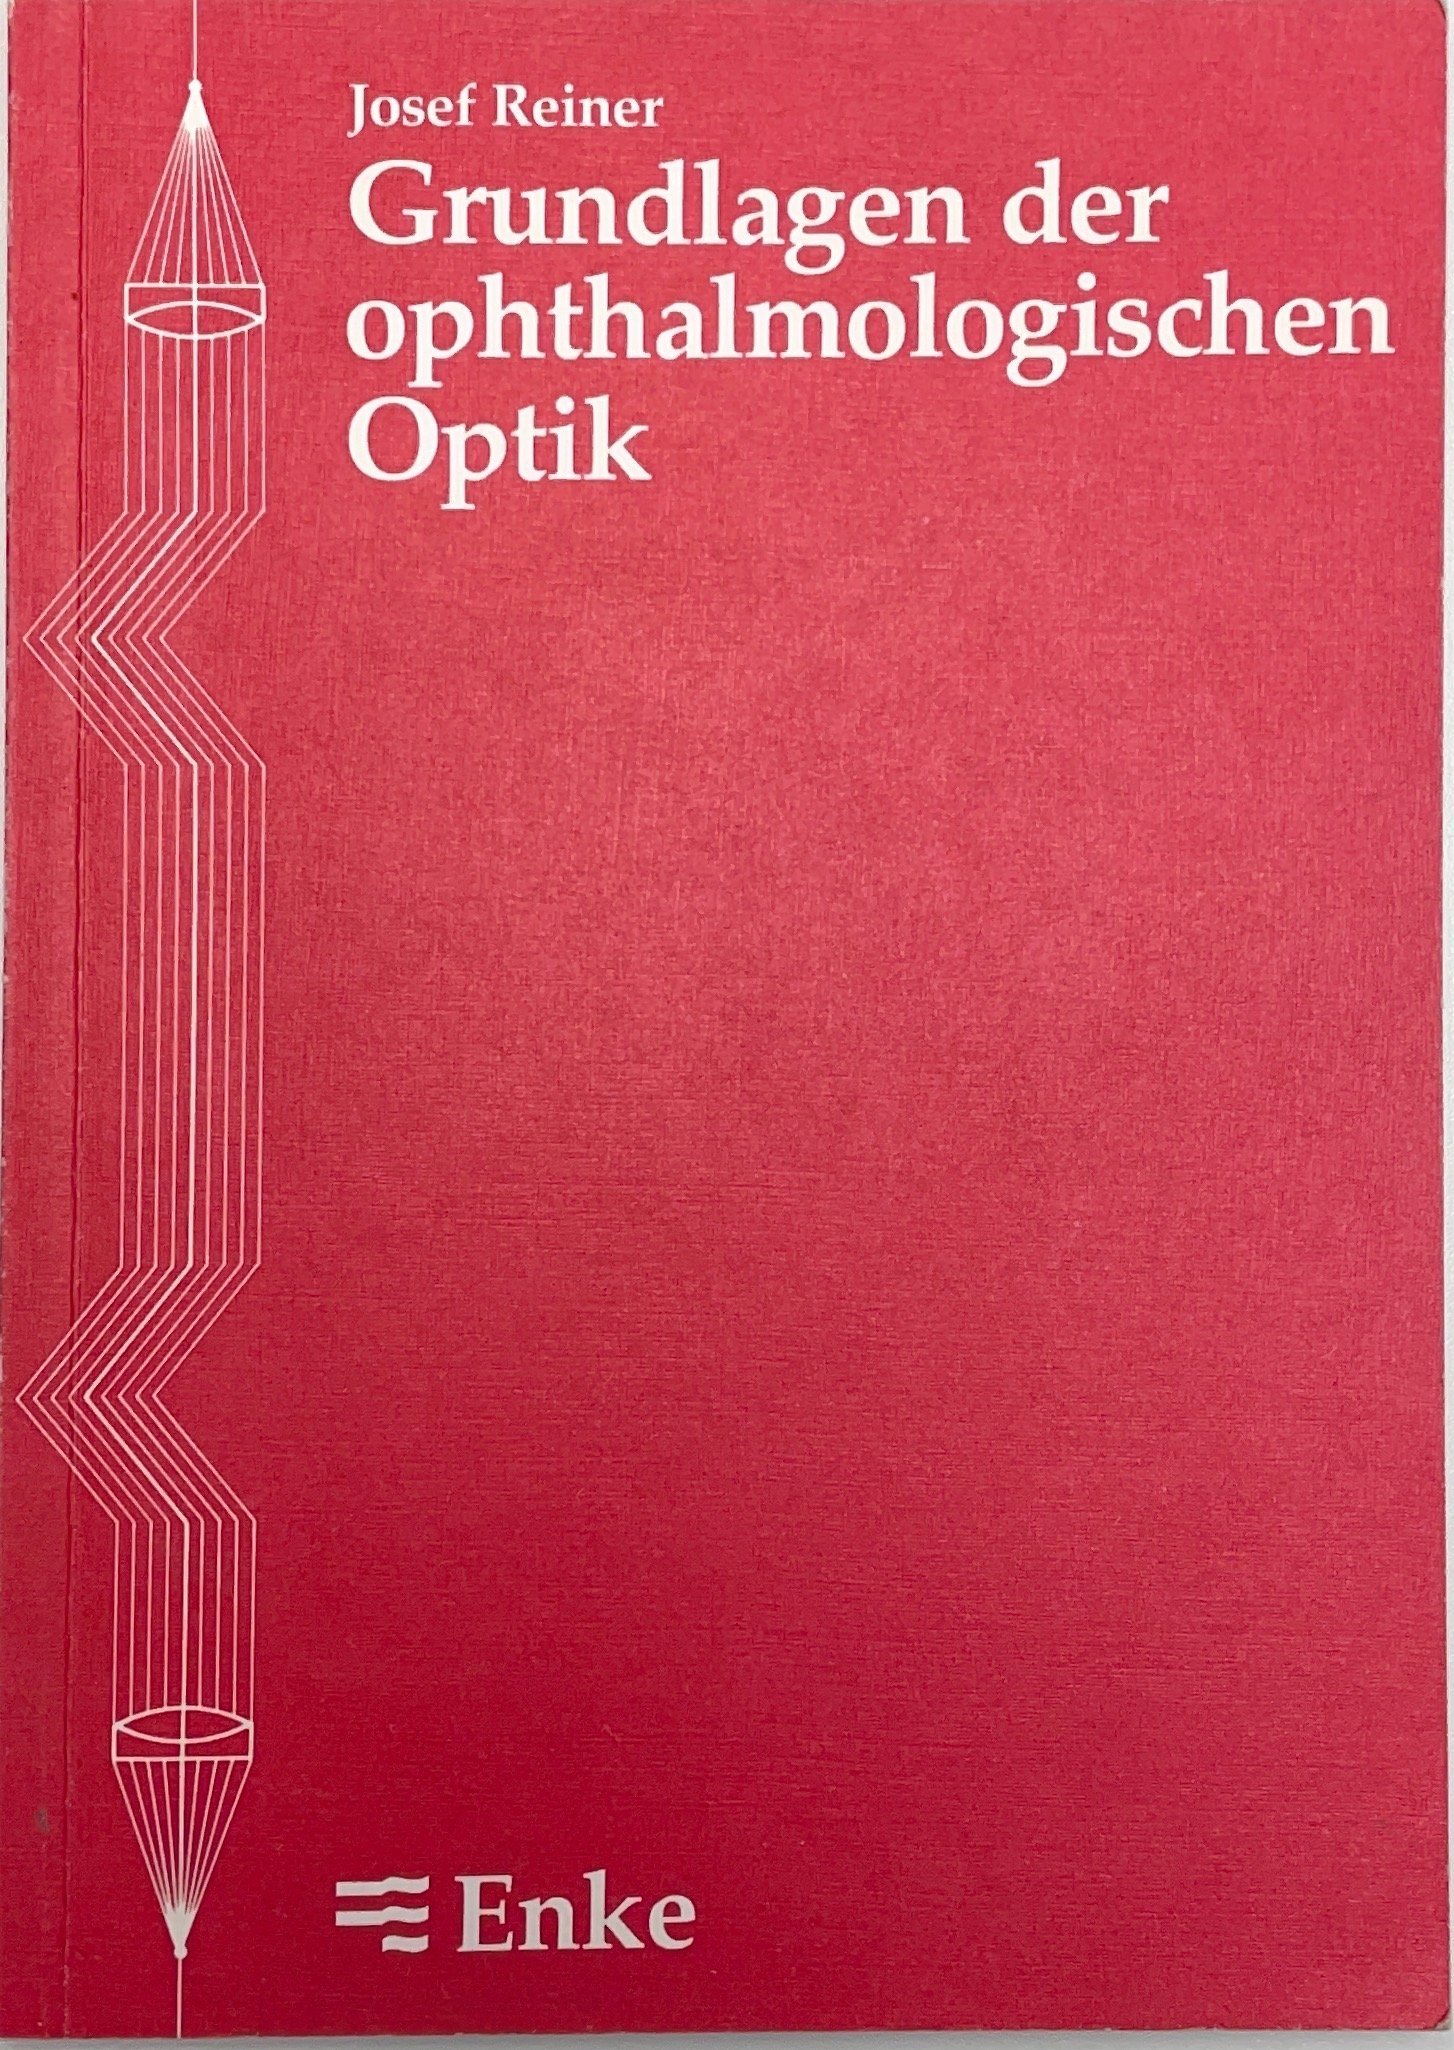 Grundlagen der ophthalmologischen Optik (Krankenhausmuseum Bielefeld e.V. CC BY-NC-SA)